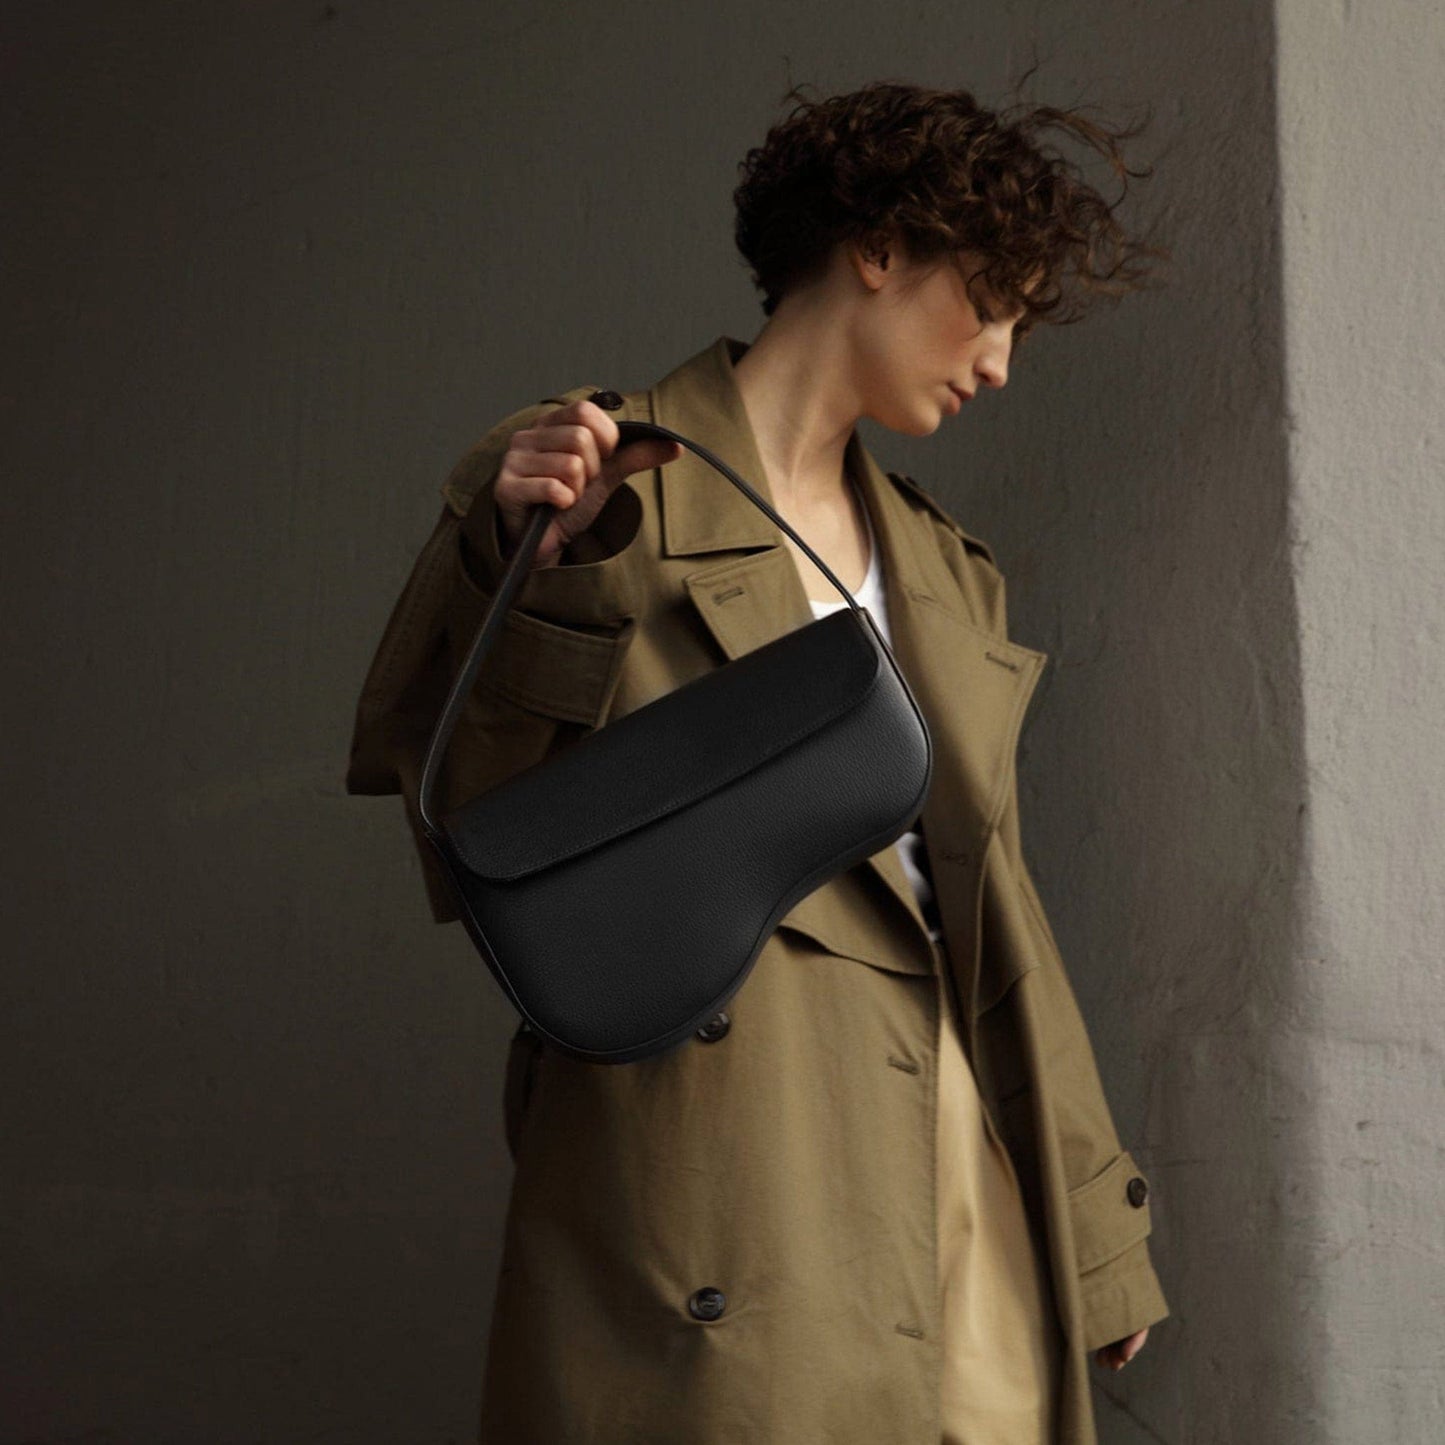 Women's Handbag, Clover | Walnut - By ASK